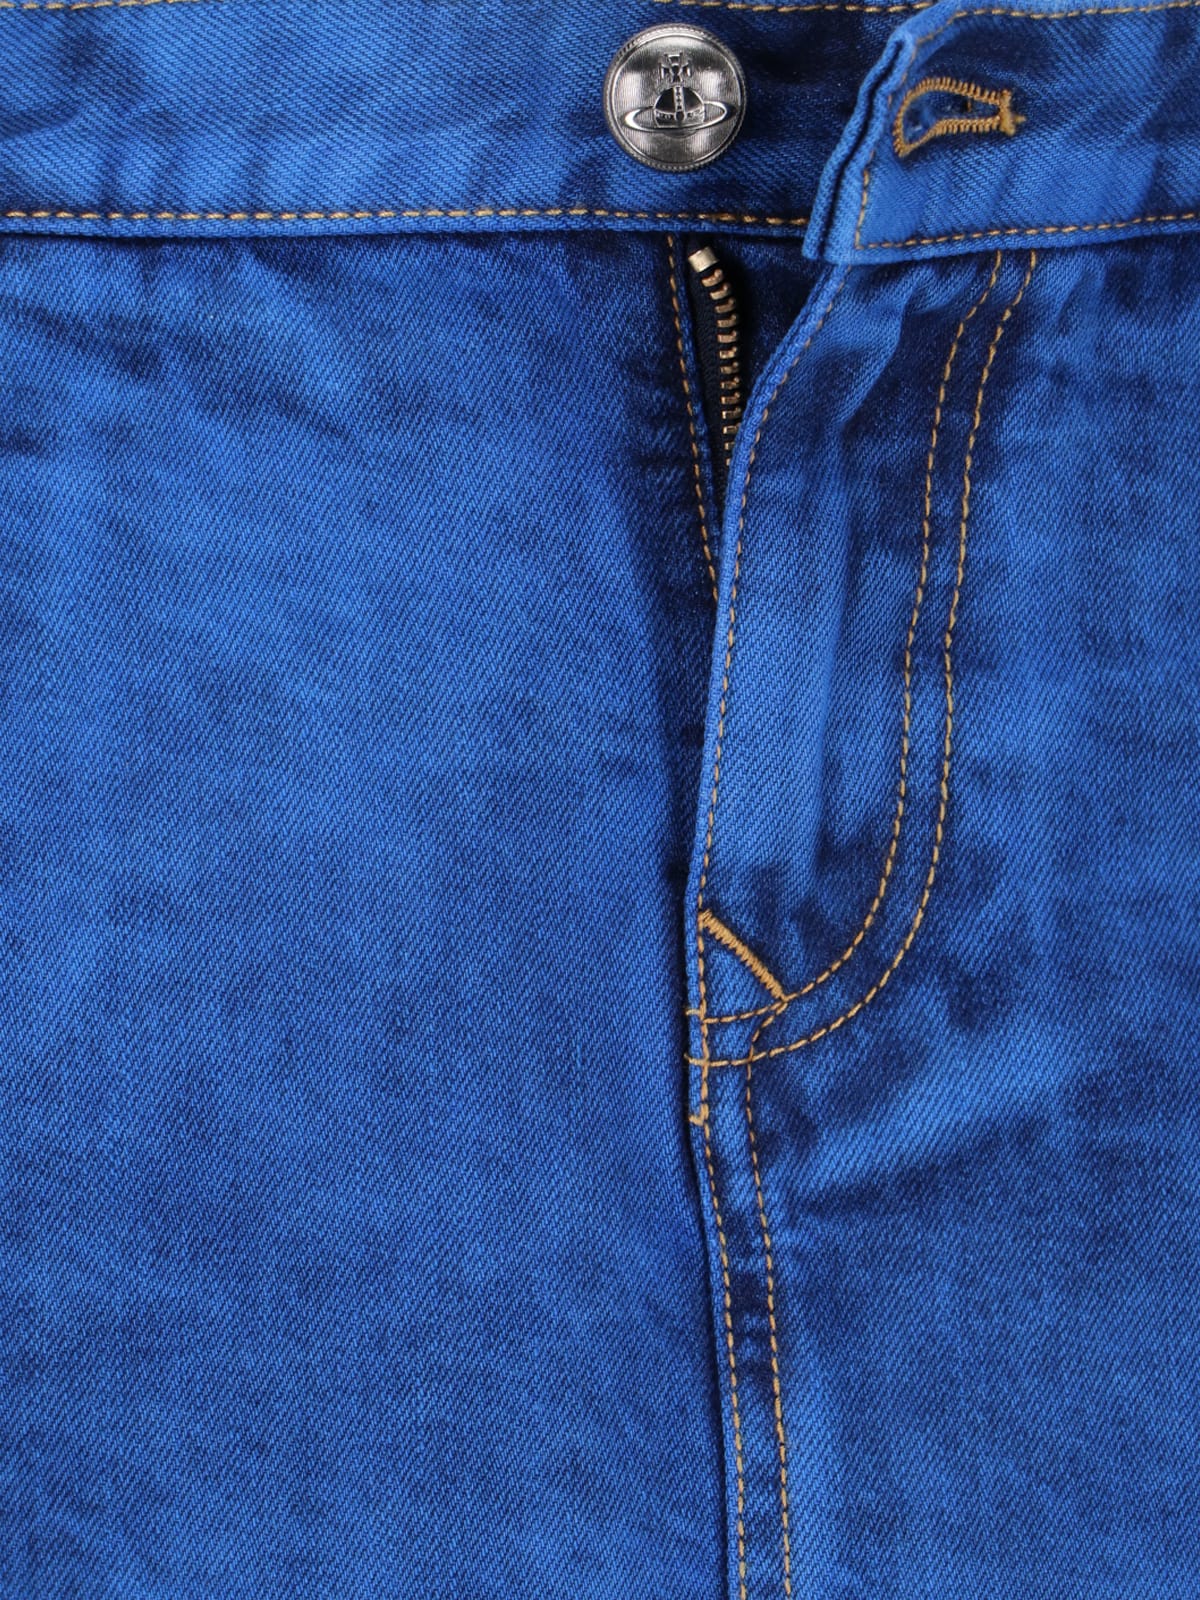 Shop Vivienne Westwood Denim Mini Skirt In Blue